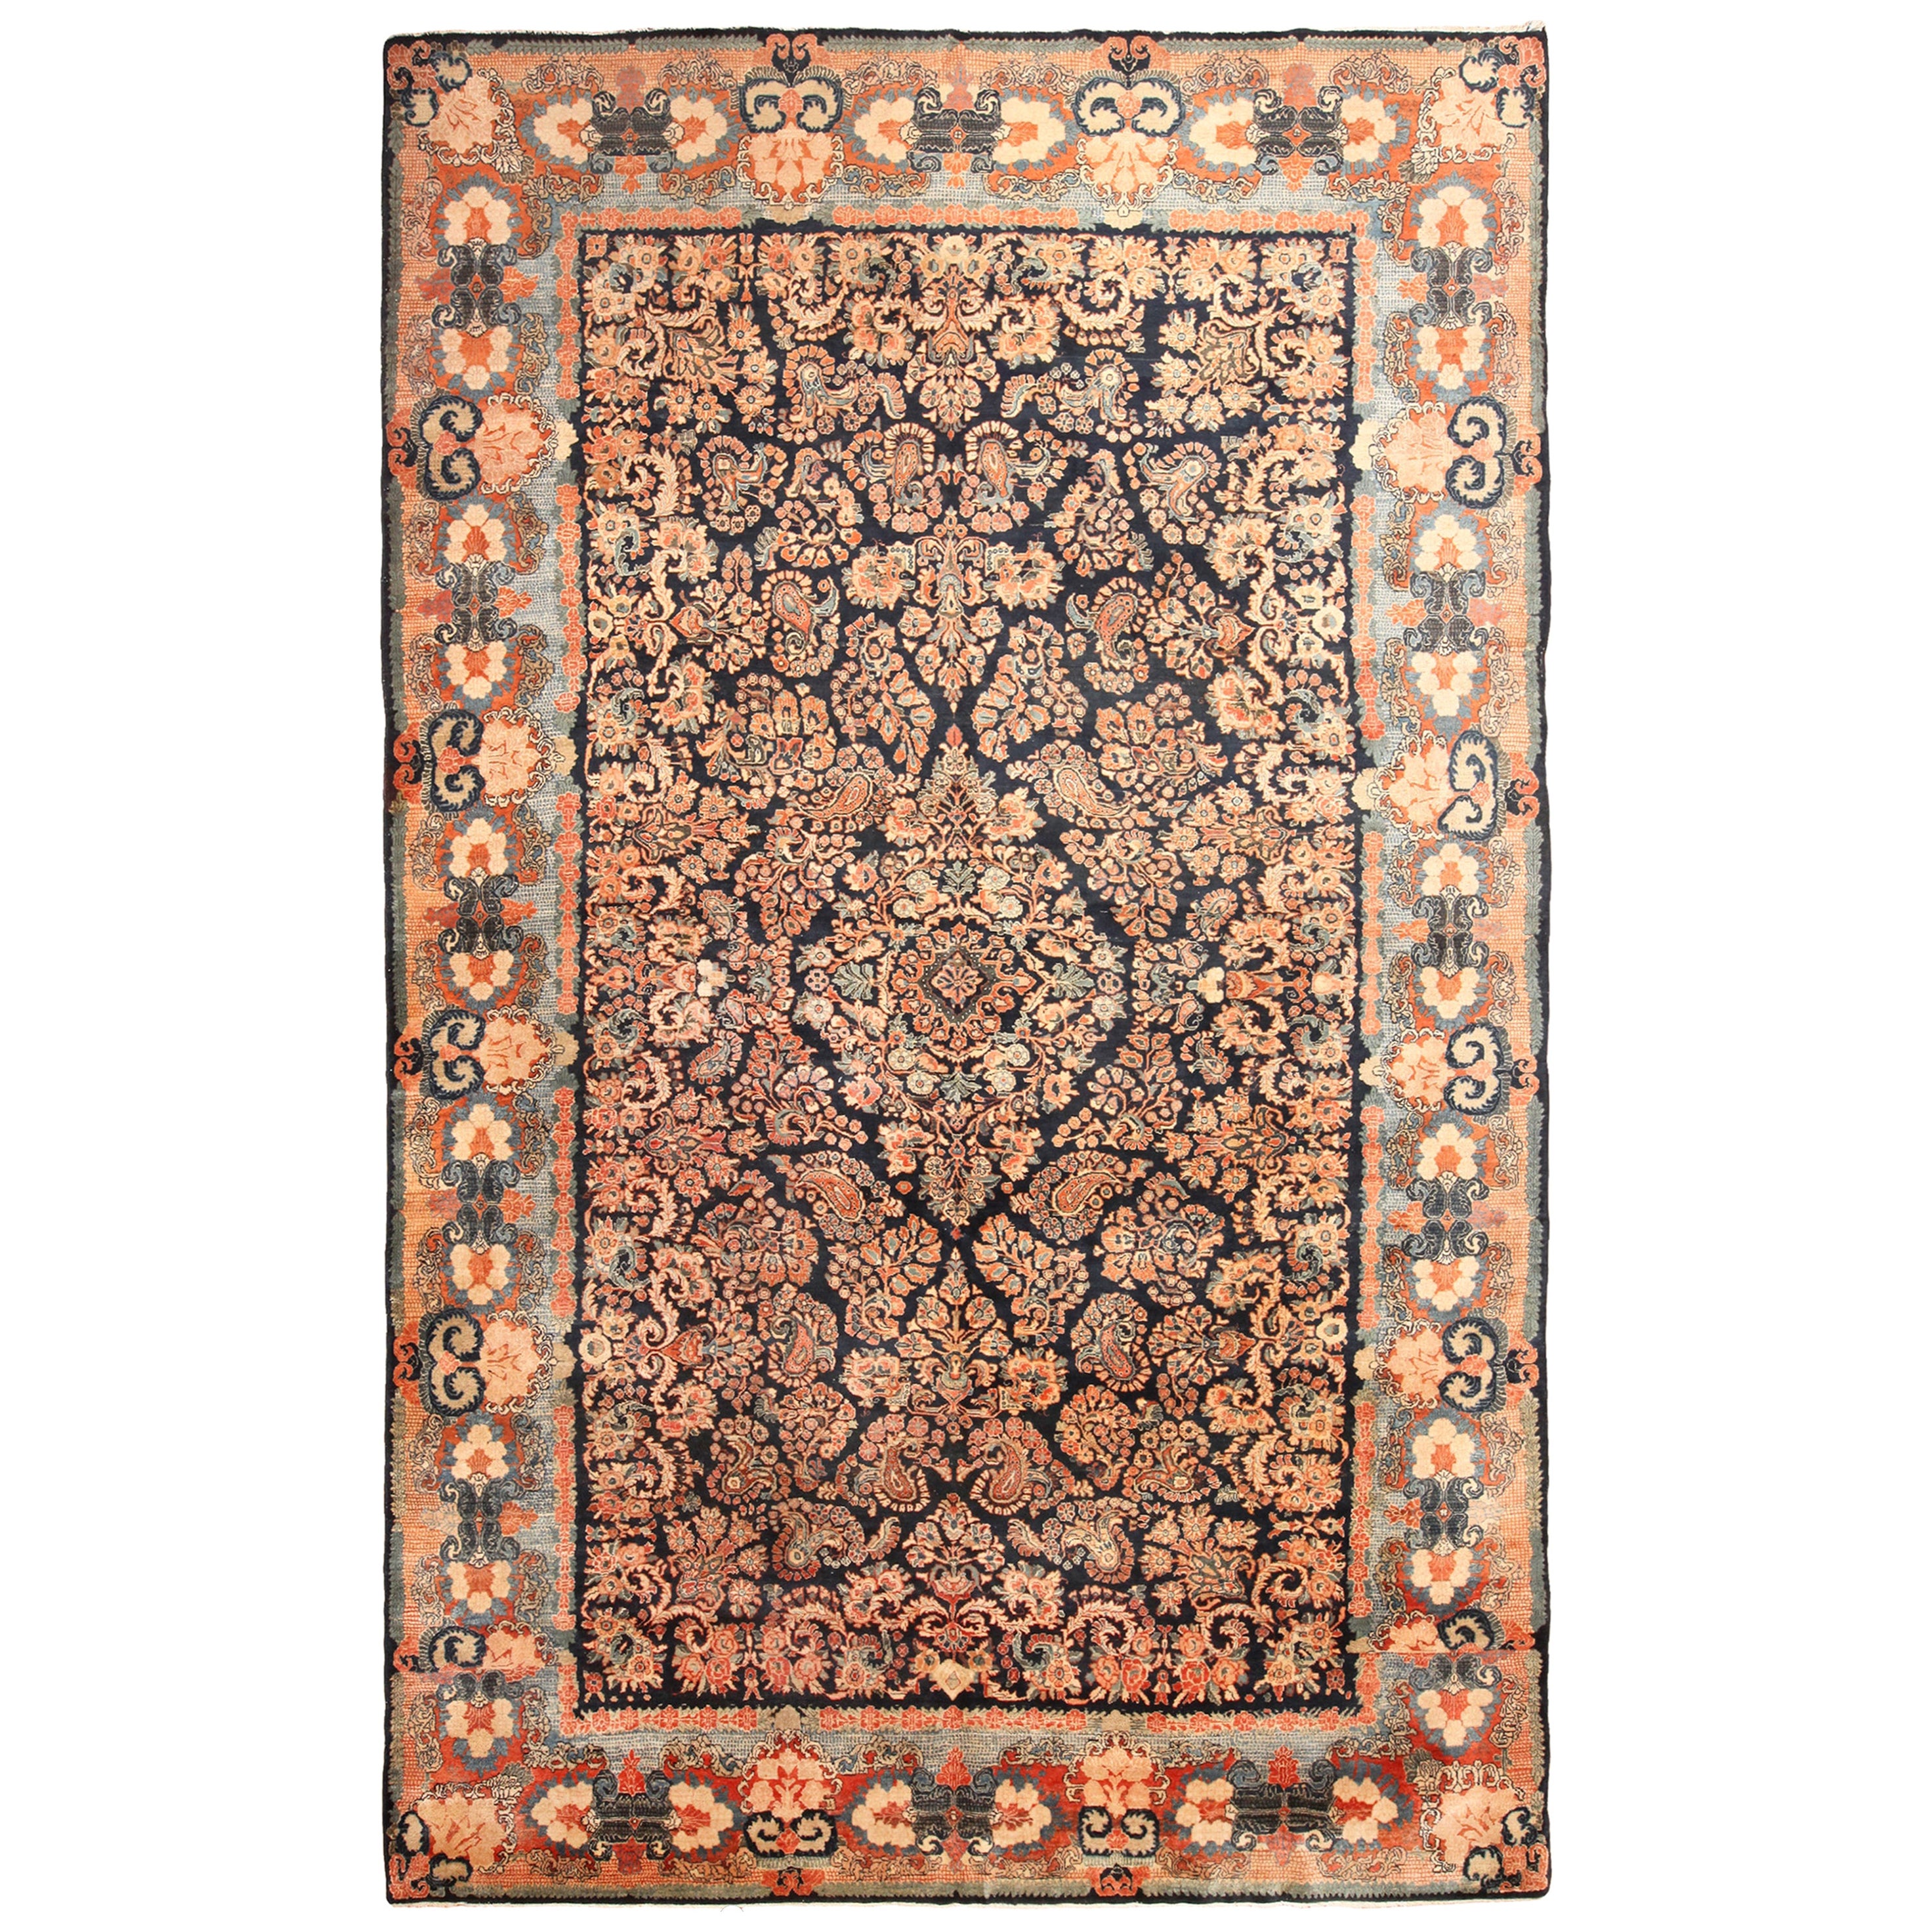 Tapis Sarouk persan ancien à motifs floraux de la collection Nazmiyal. 10 pieds x 17 pieds